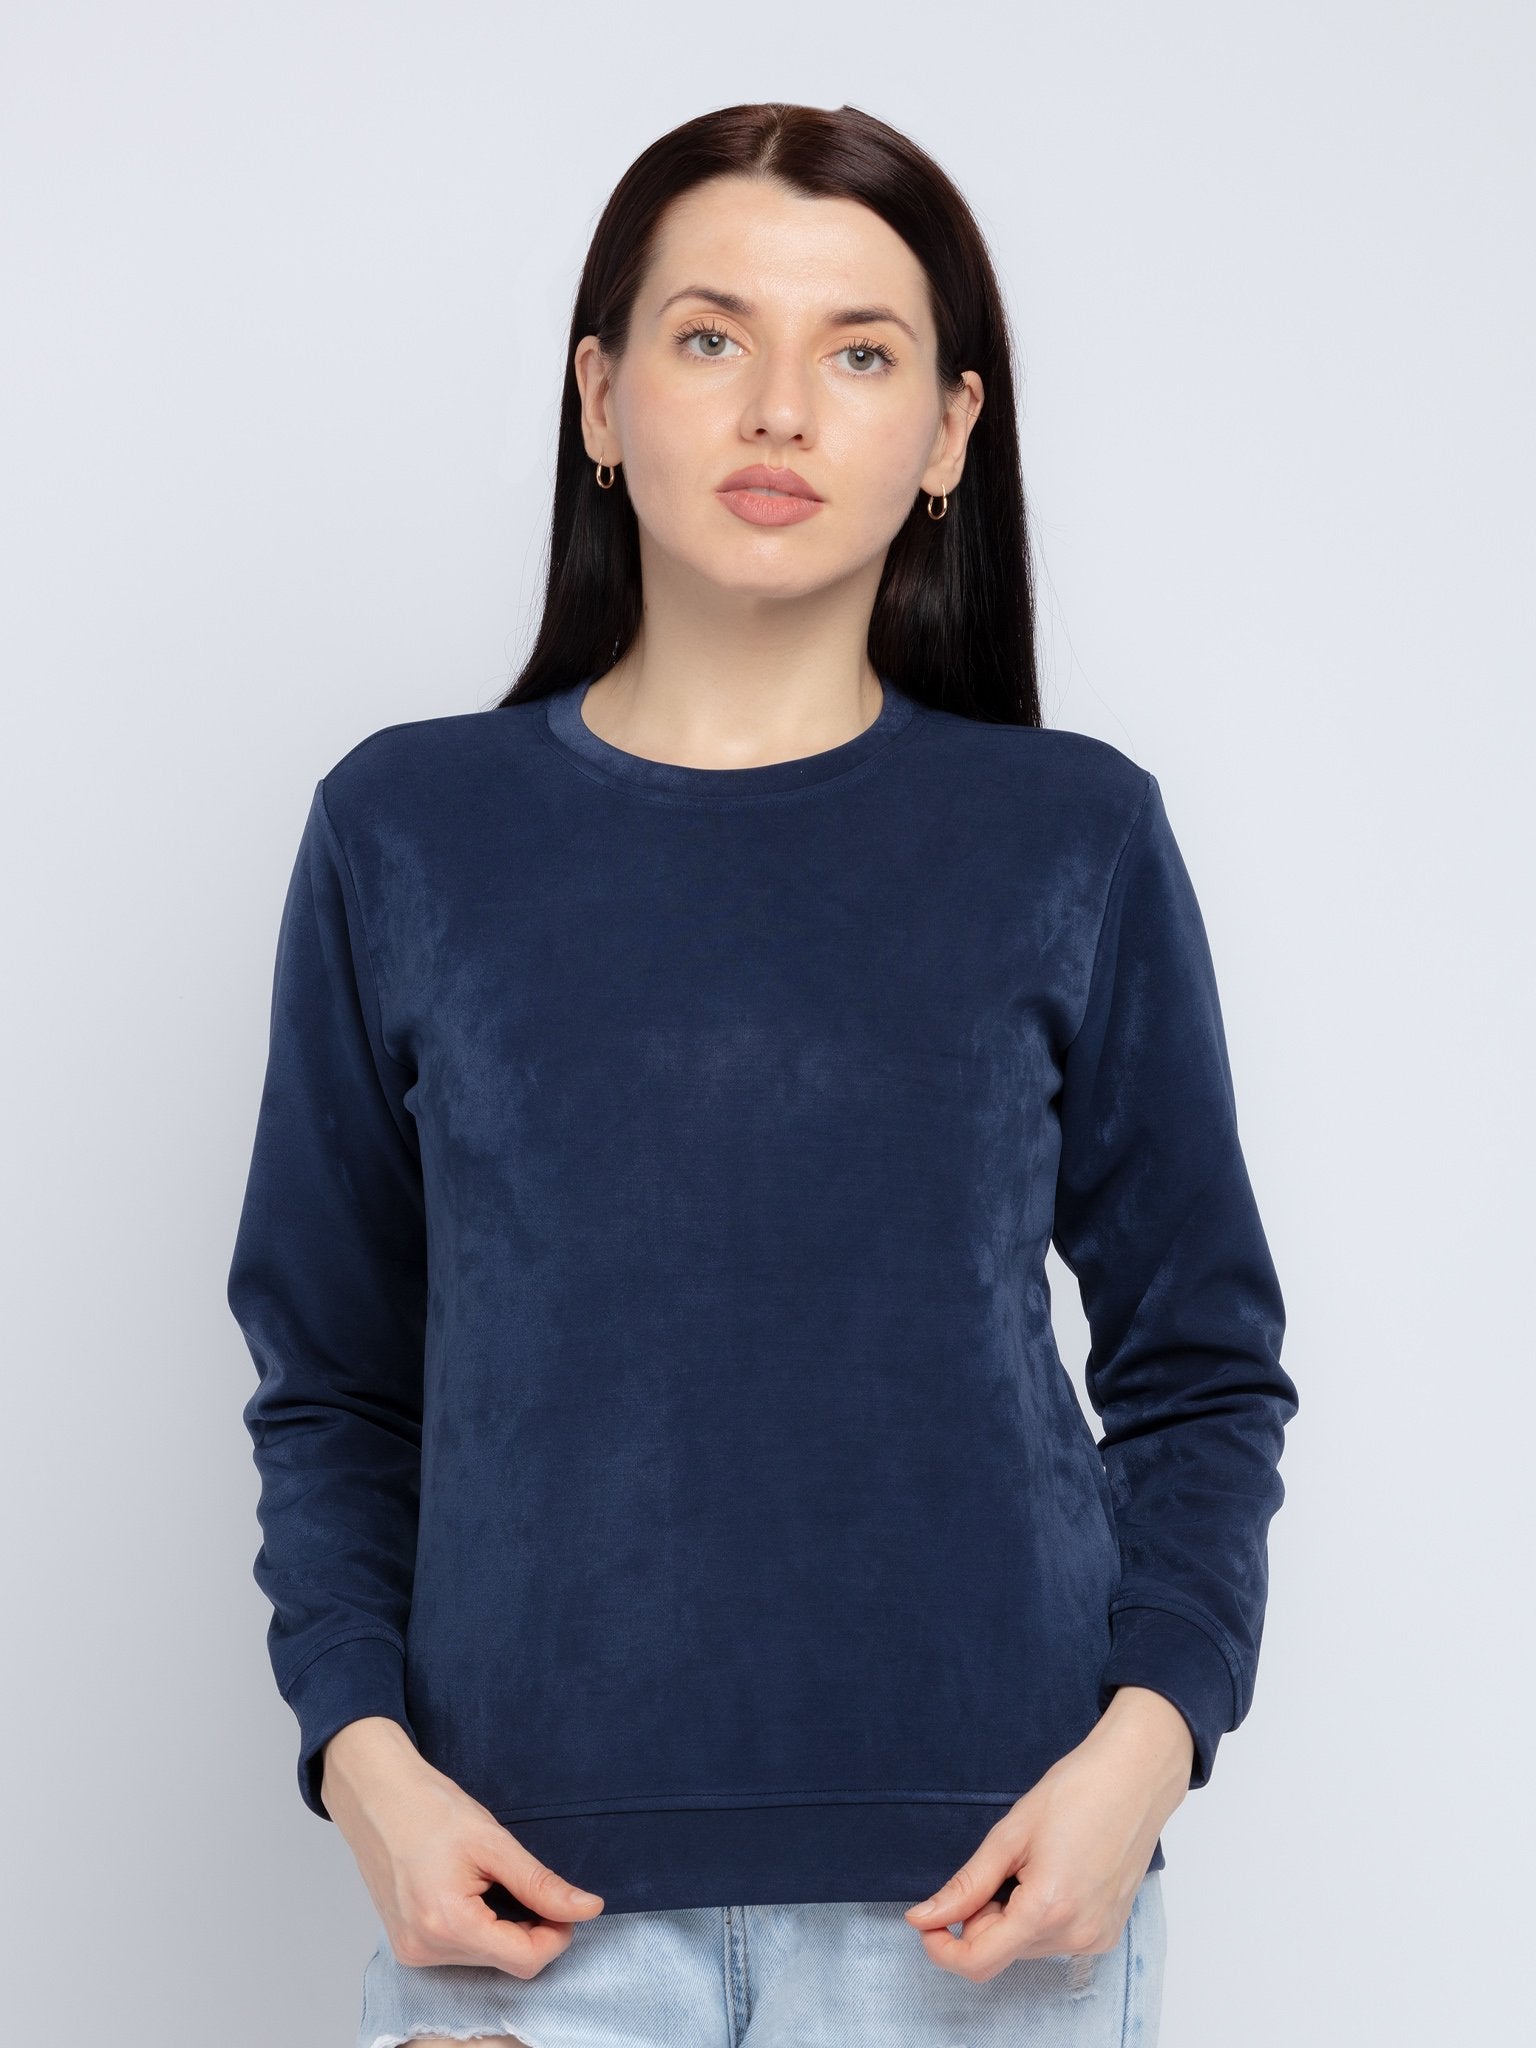 stylish sweatshirts for women